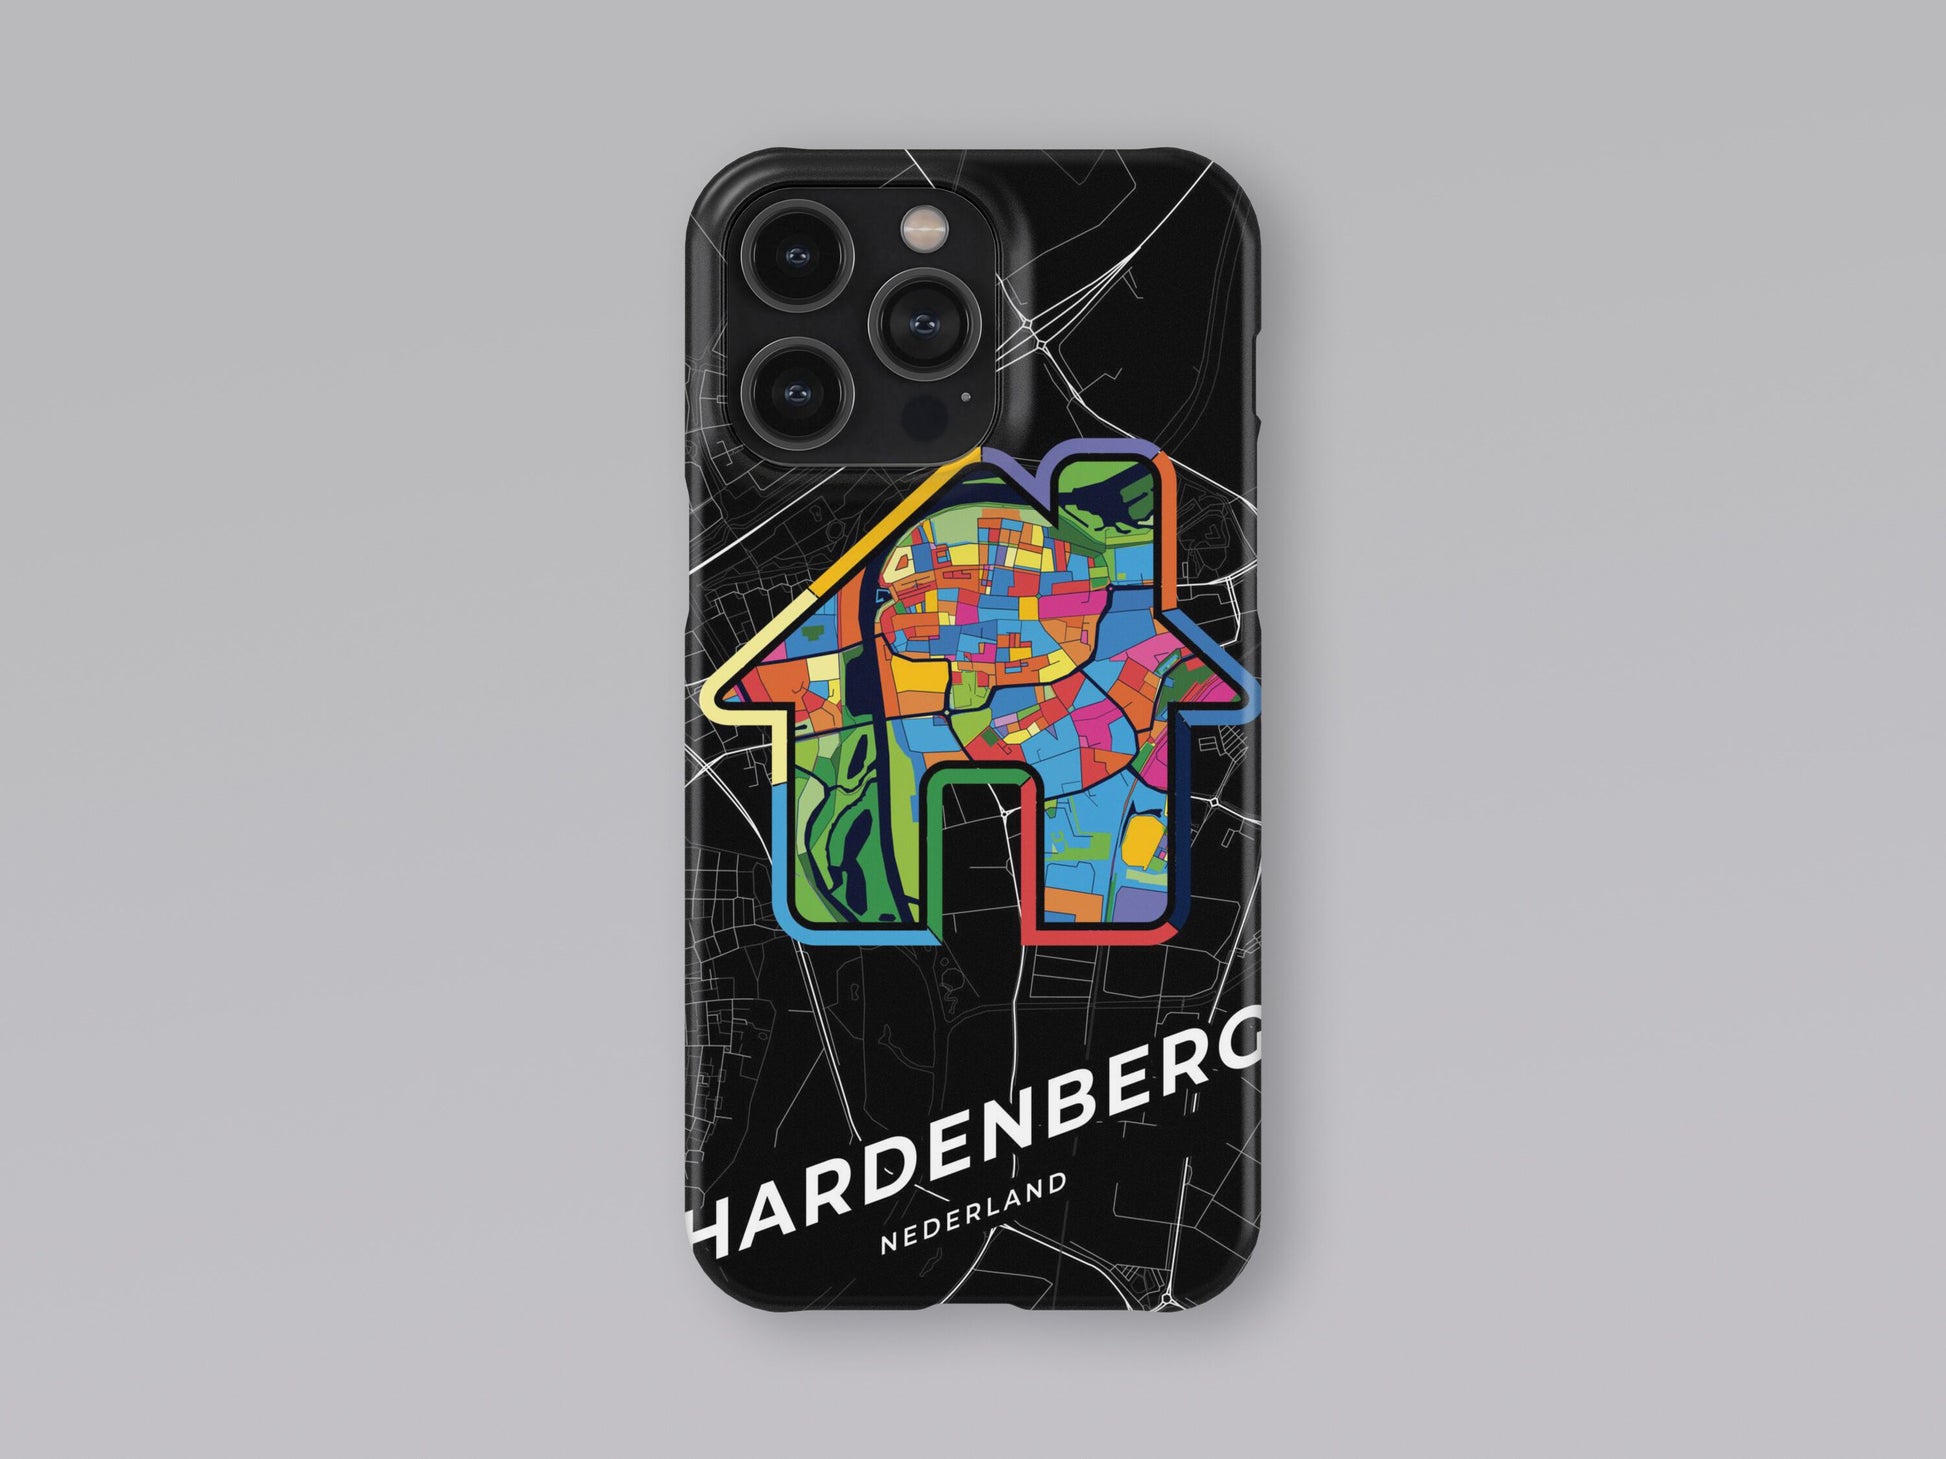 Hardenberg Netherlands slim phone case with colorful icon. Birthday, wedding or housewarming gift. Couple match cases. 3